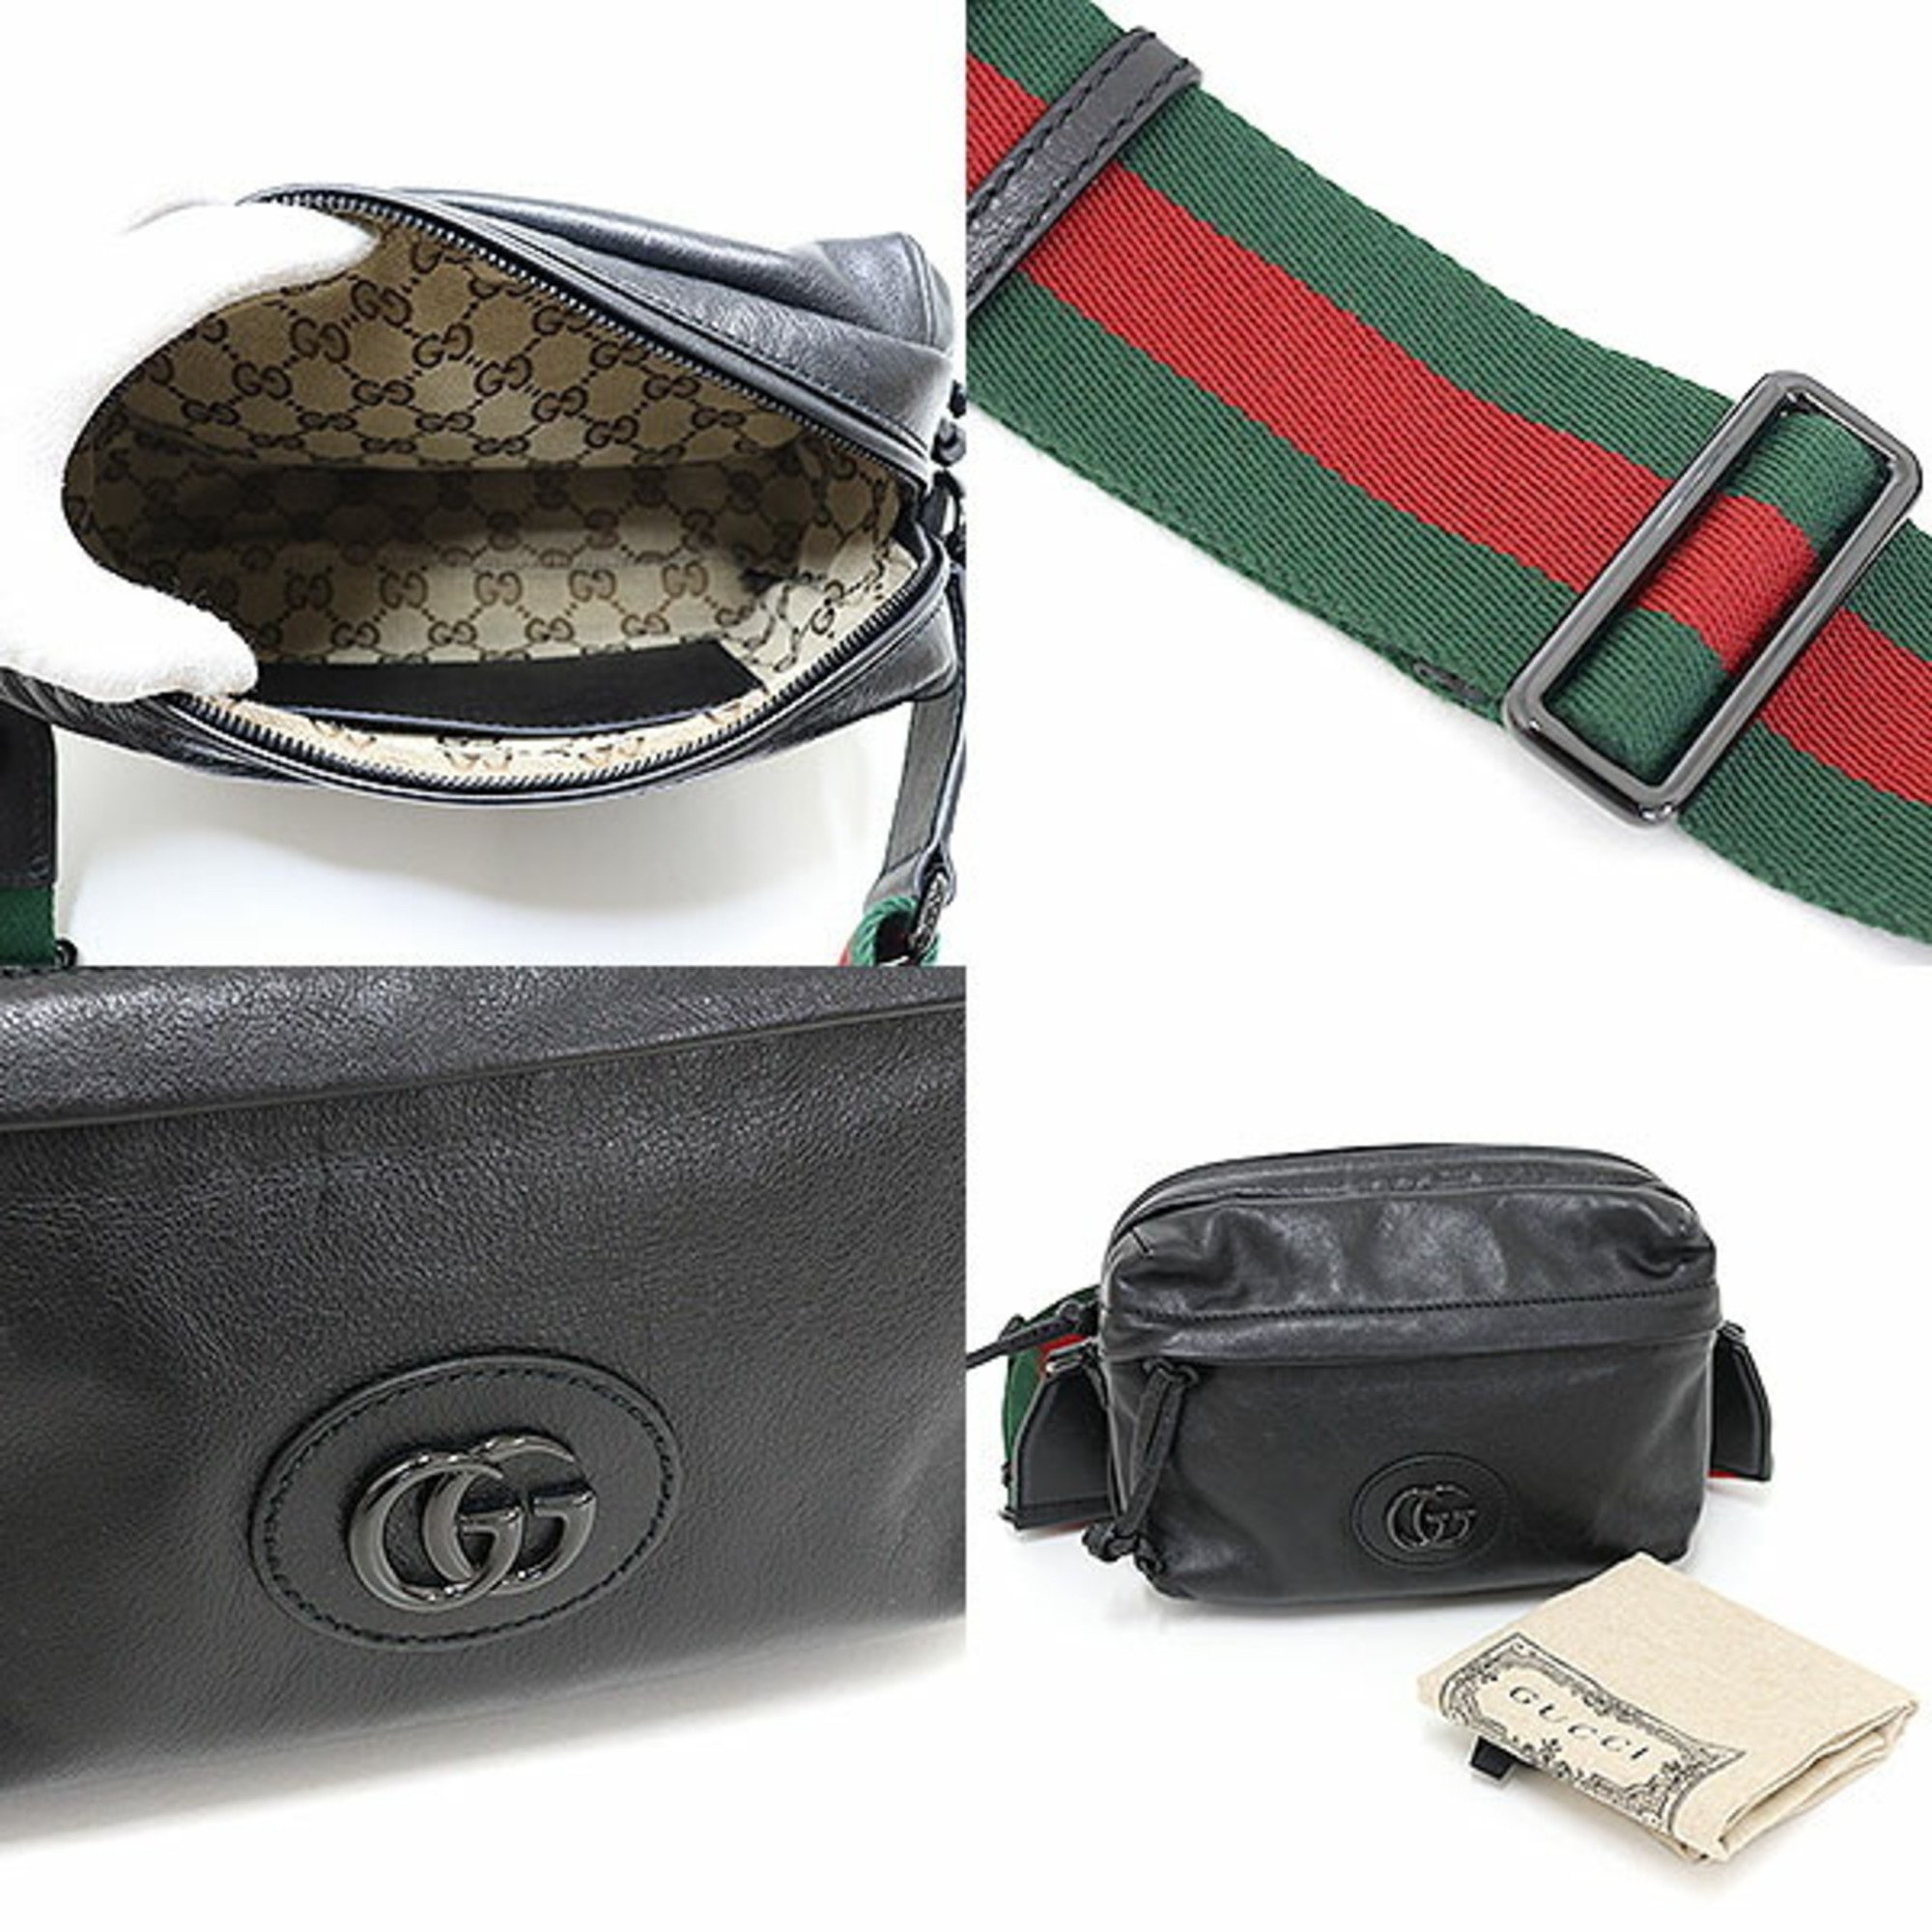 Gucci Double G Crossbody Bag Black Leather 725696 Shoulder Web Stripe